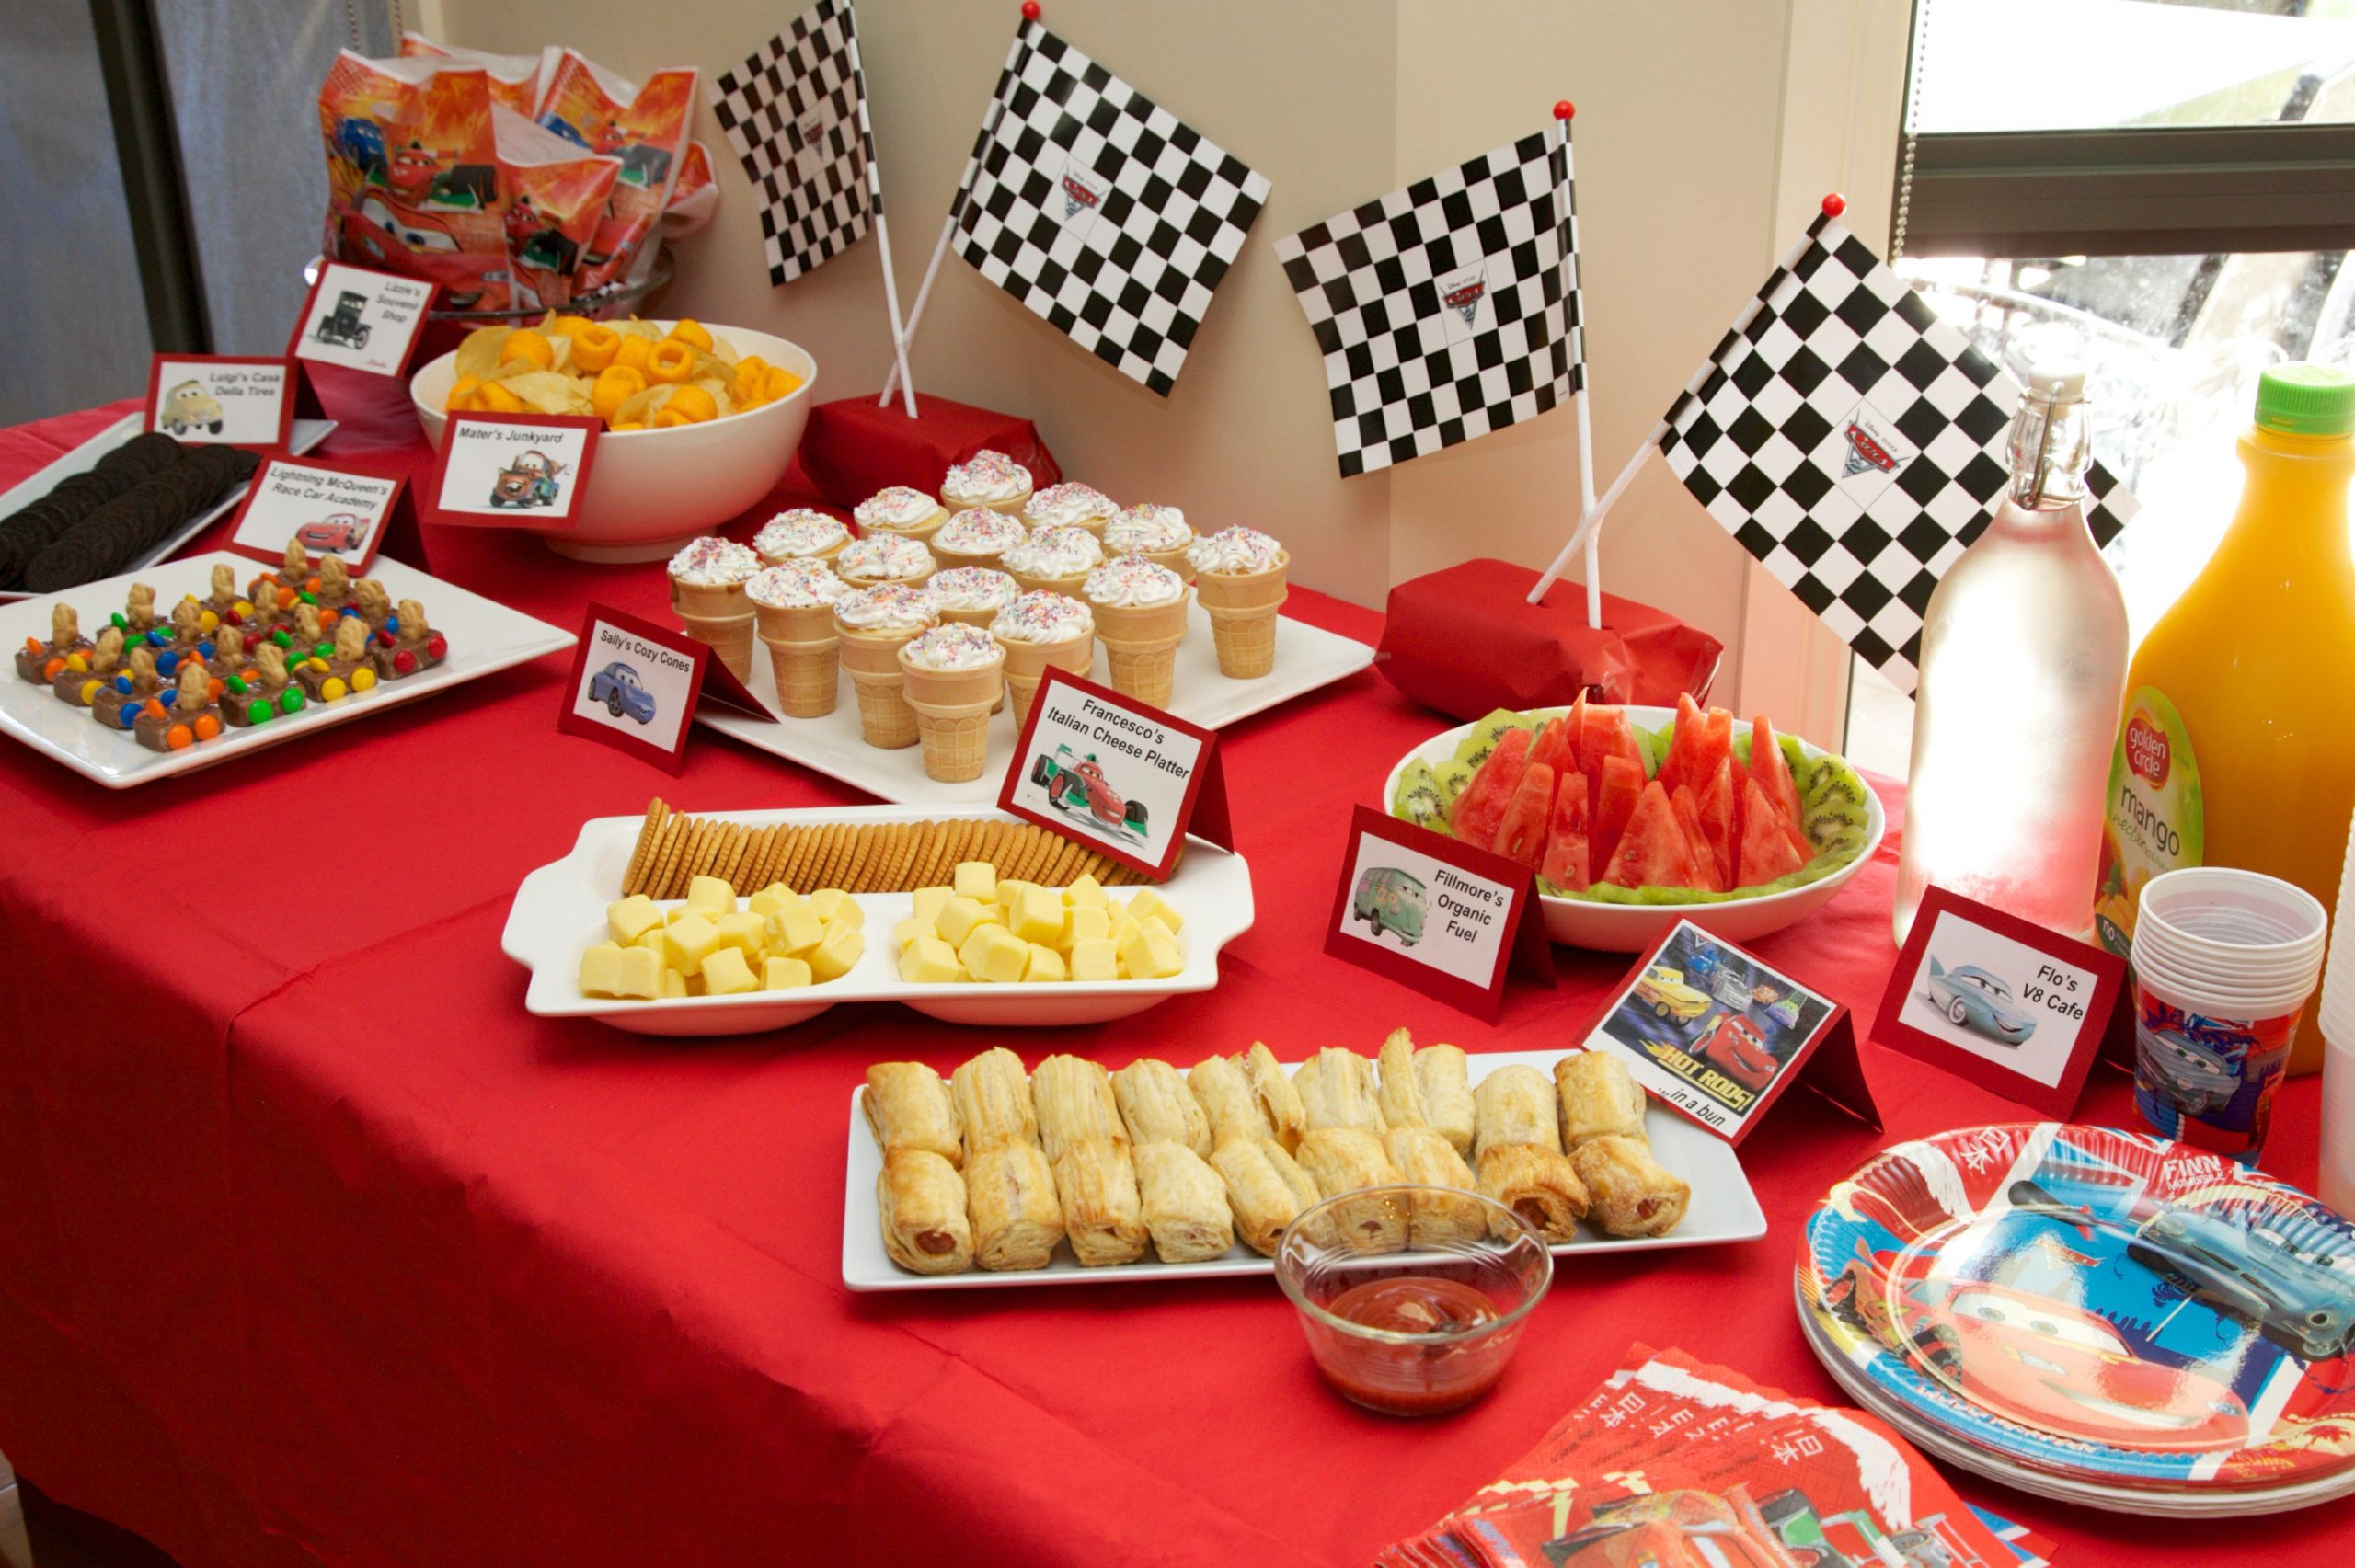 Disney Cars Birthday Party Food Ideas
 Disney Cars Birthday Party on a Bud Kidz Activities